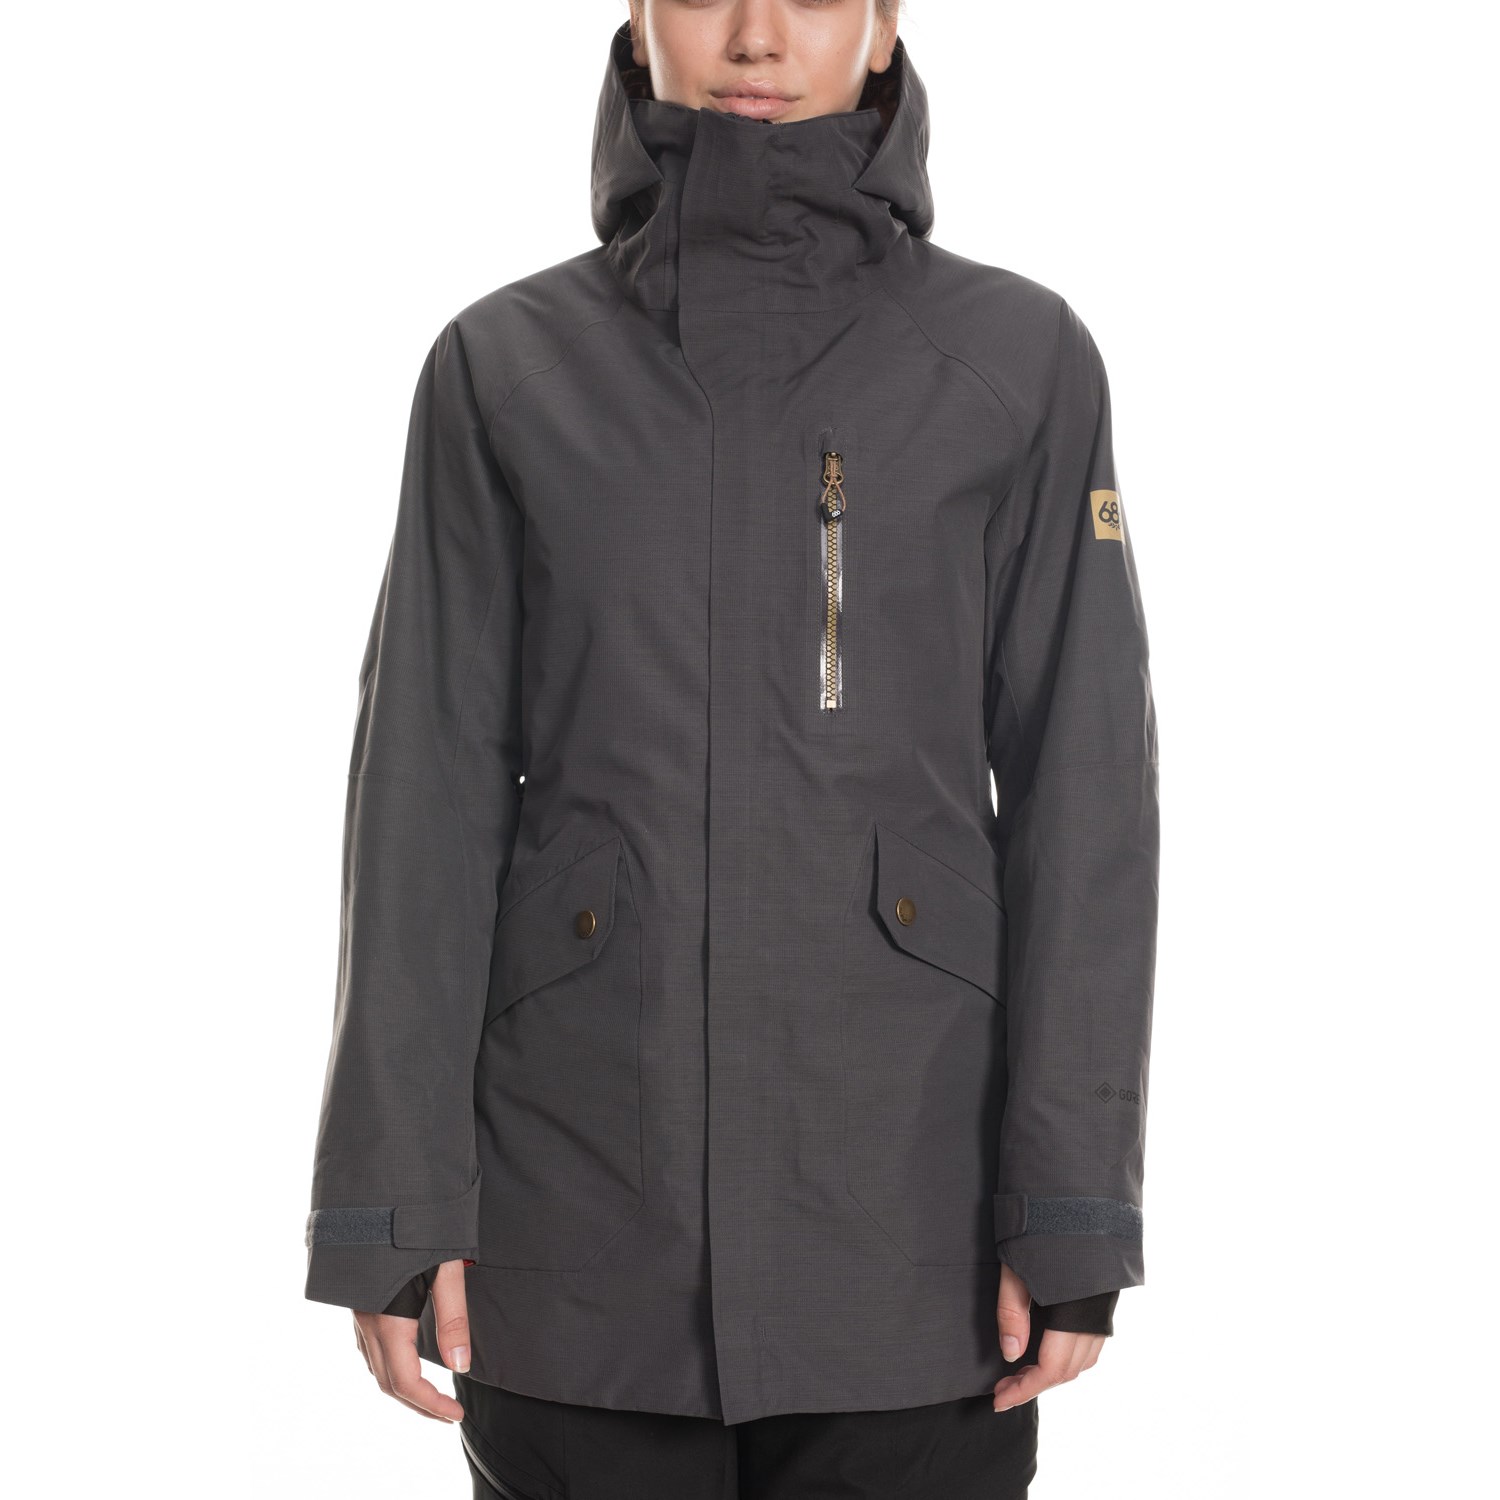 GLCR GORE-TEX Moonlight Insulated Jacket - Women's